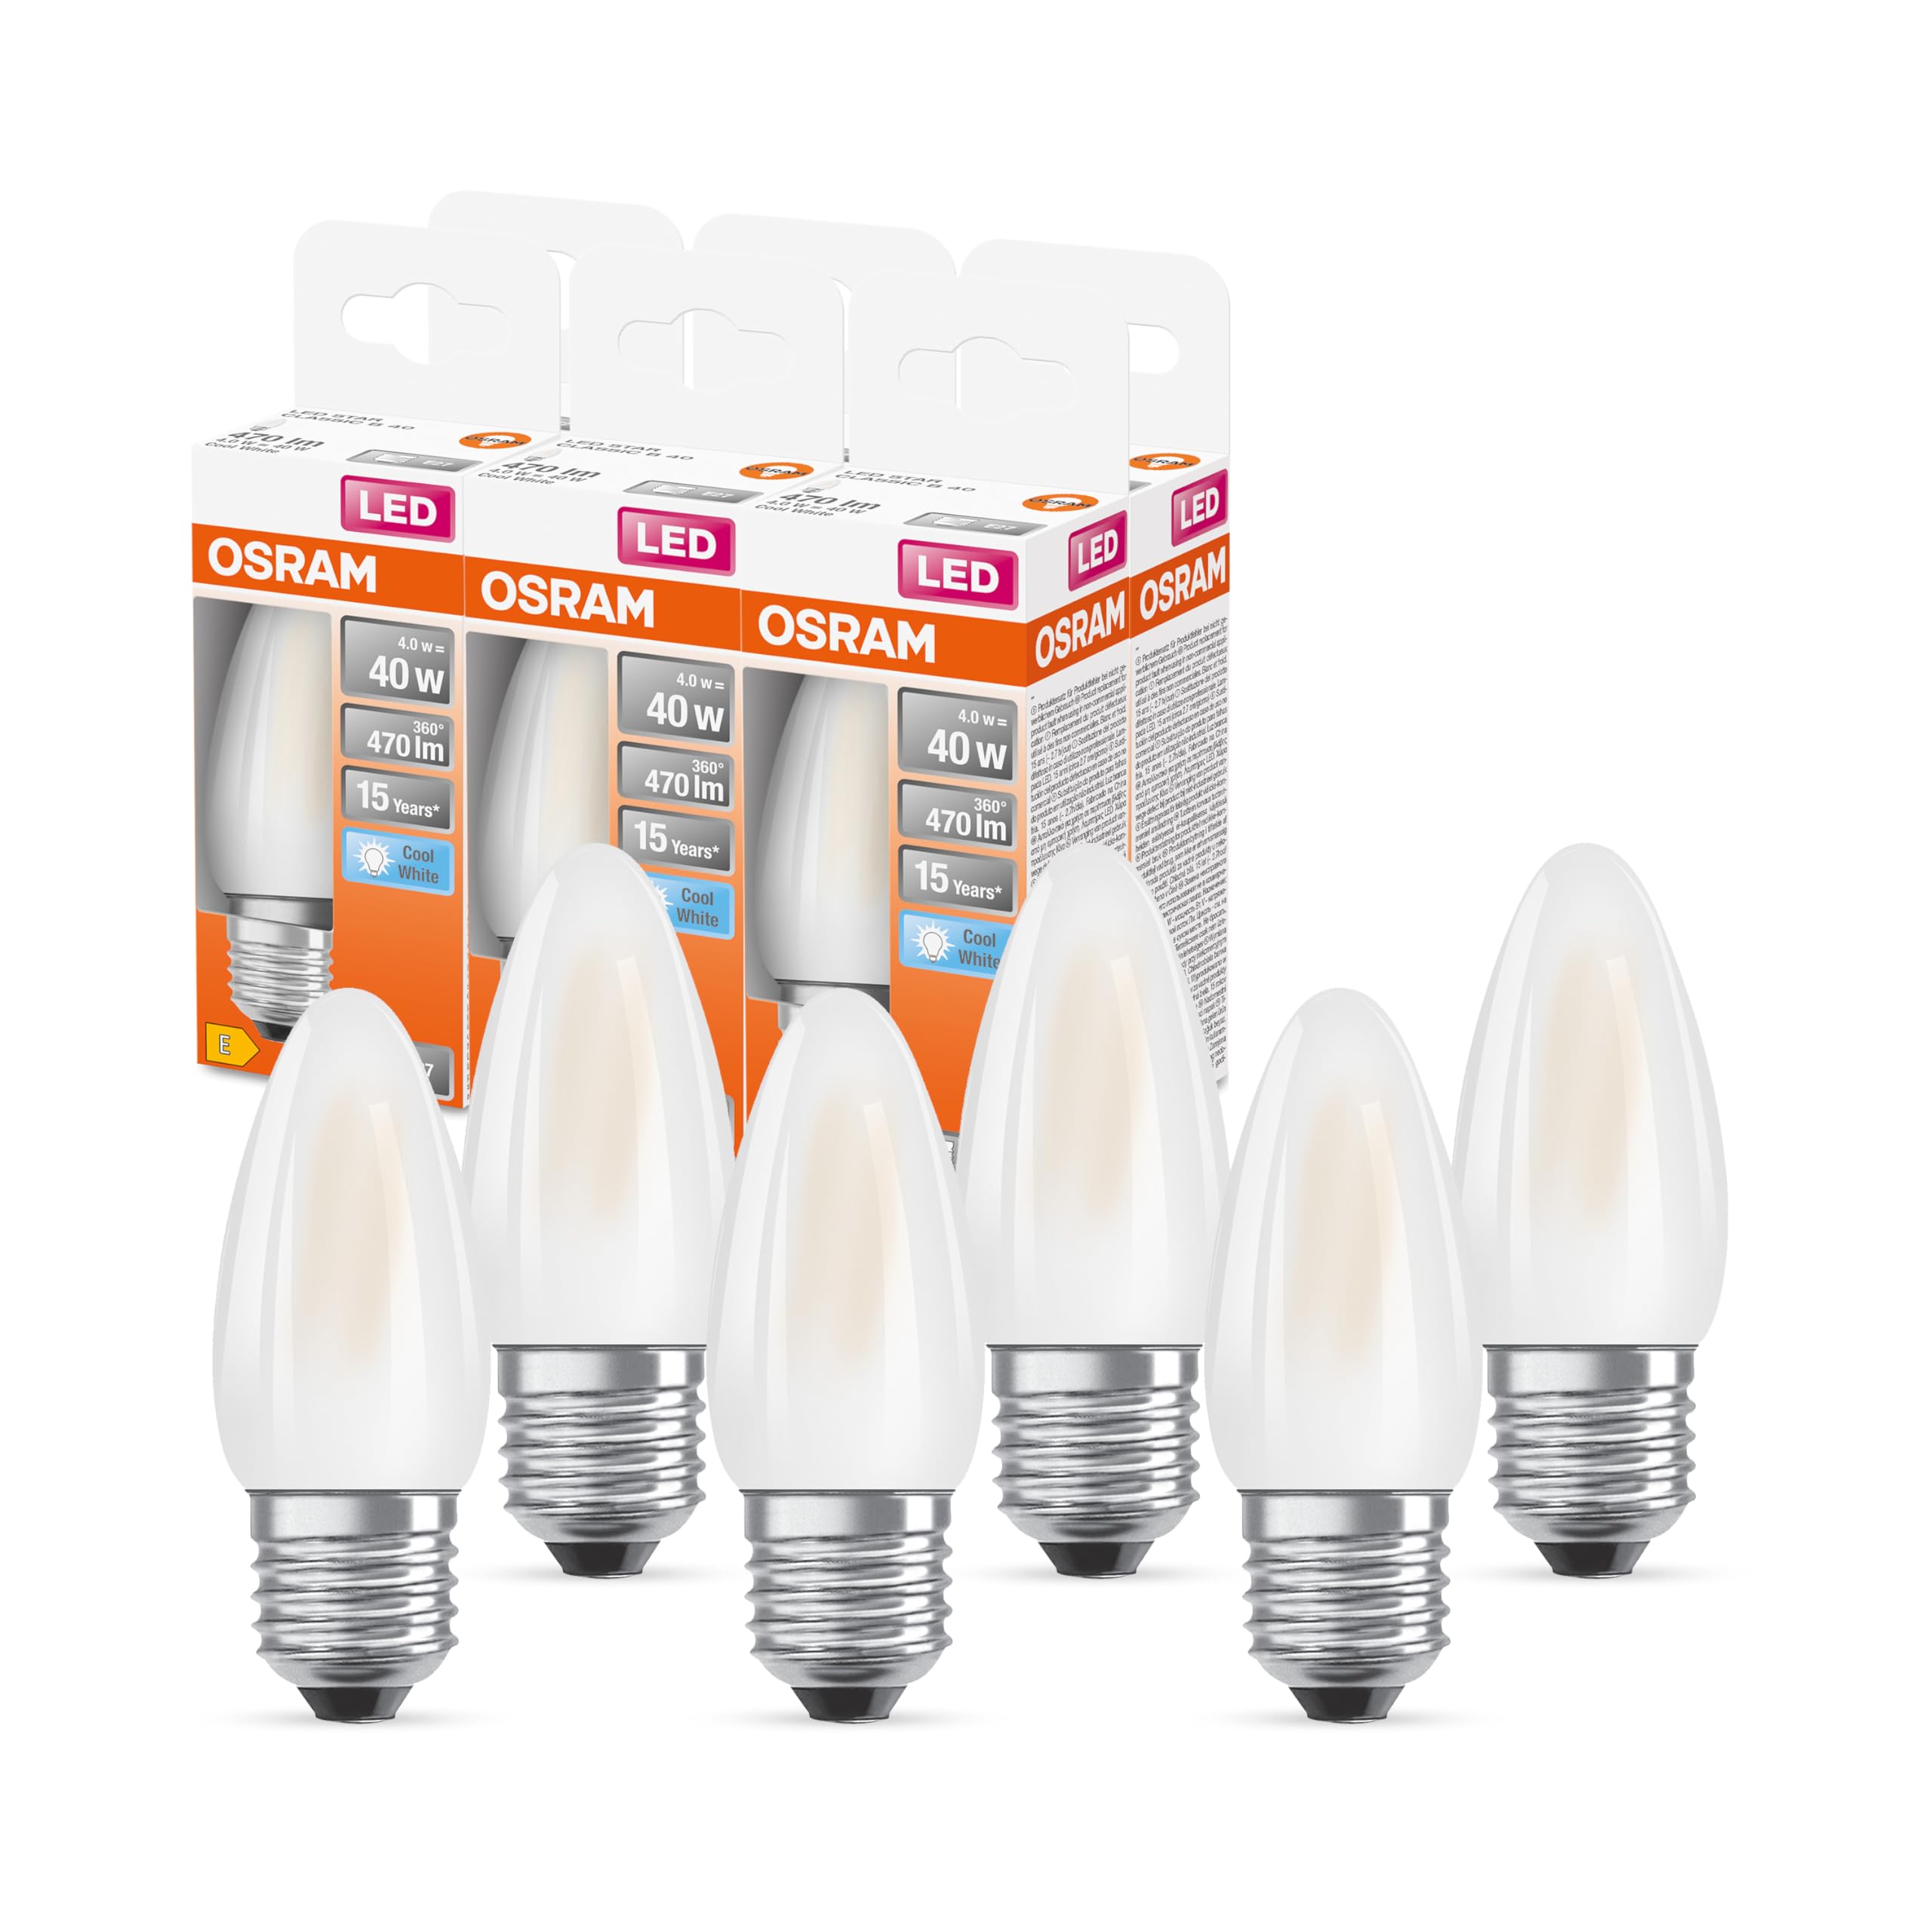 OSRAM LED Star Classic B40 LED Lampe für E27 Sockel, Kerzenform, GL FR, 470 Lumen, kaltweiß (4000K), Ersatz für herkömmliche 40W Glühbirnen, nicht dimmbar, 6er-Pack